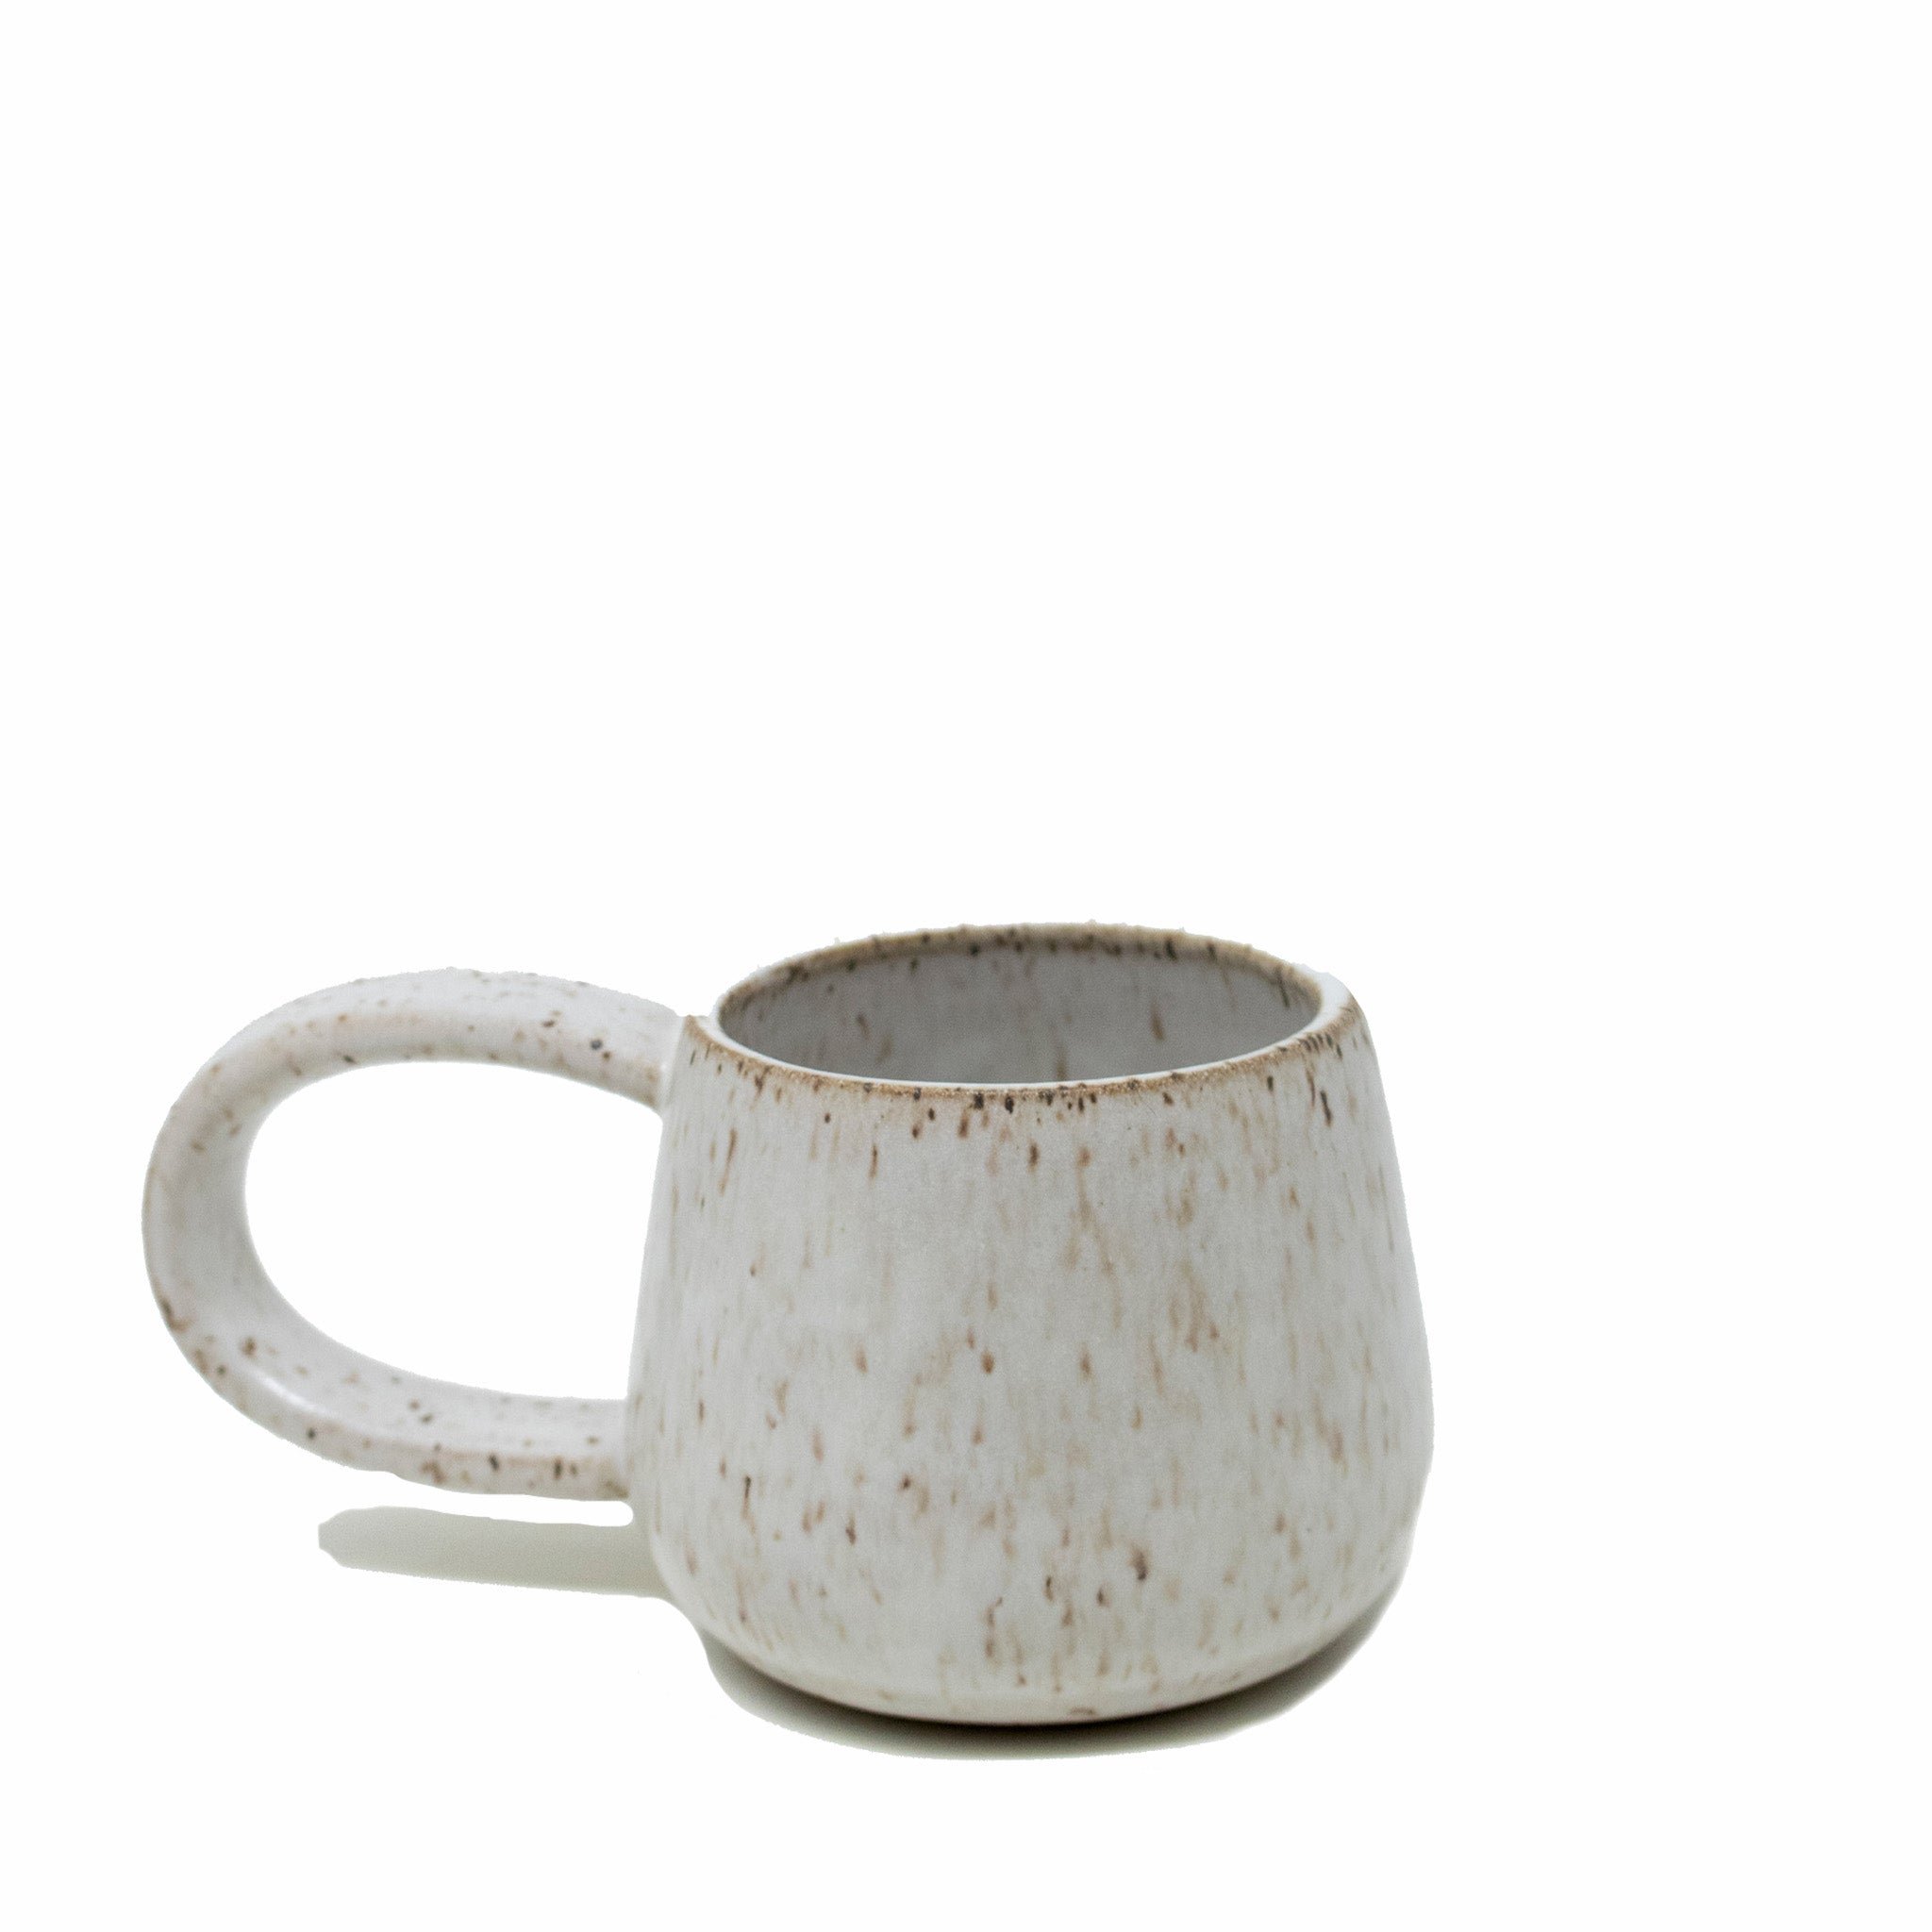 Katie Weber “Mug” (Oval Handle) - August Shop